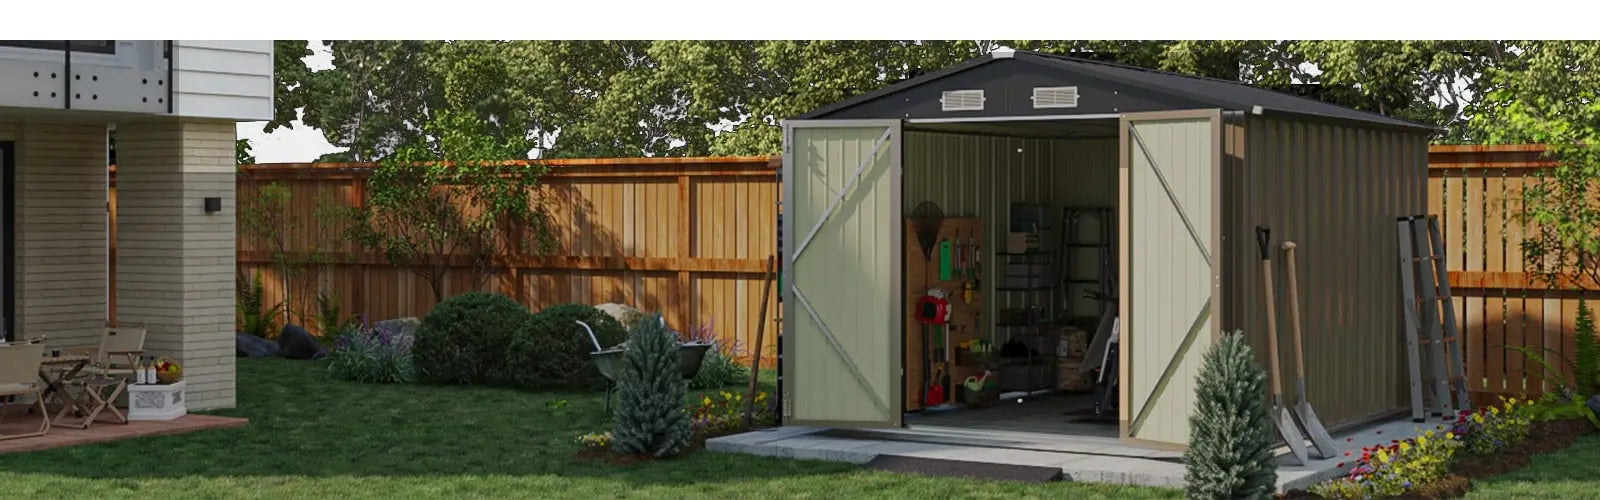 10x10 metal storage shed standing in backyard